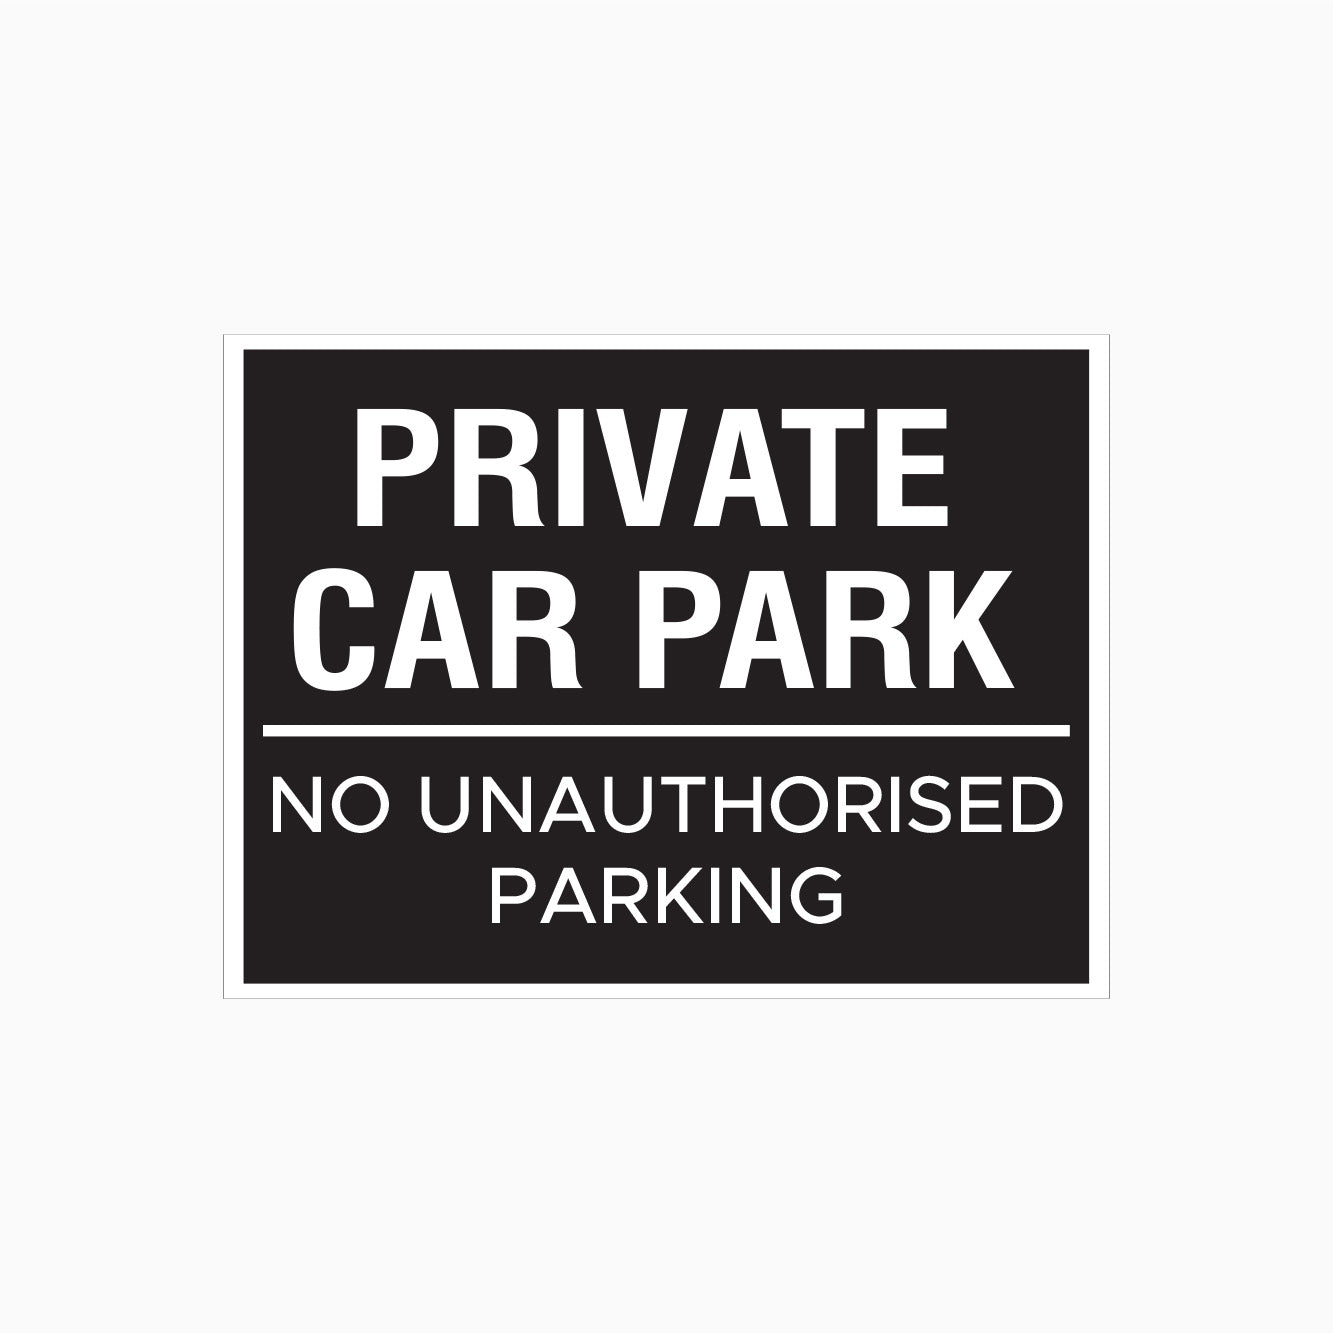 PRIVATE CAR PARK - NO UNAUTHORISED PARKING SIGN